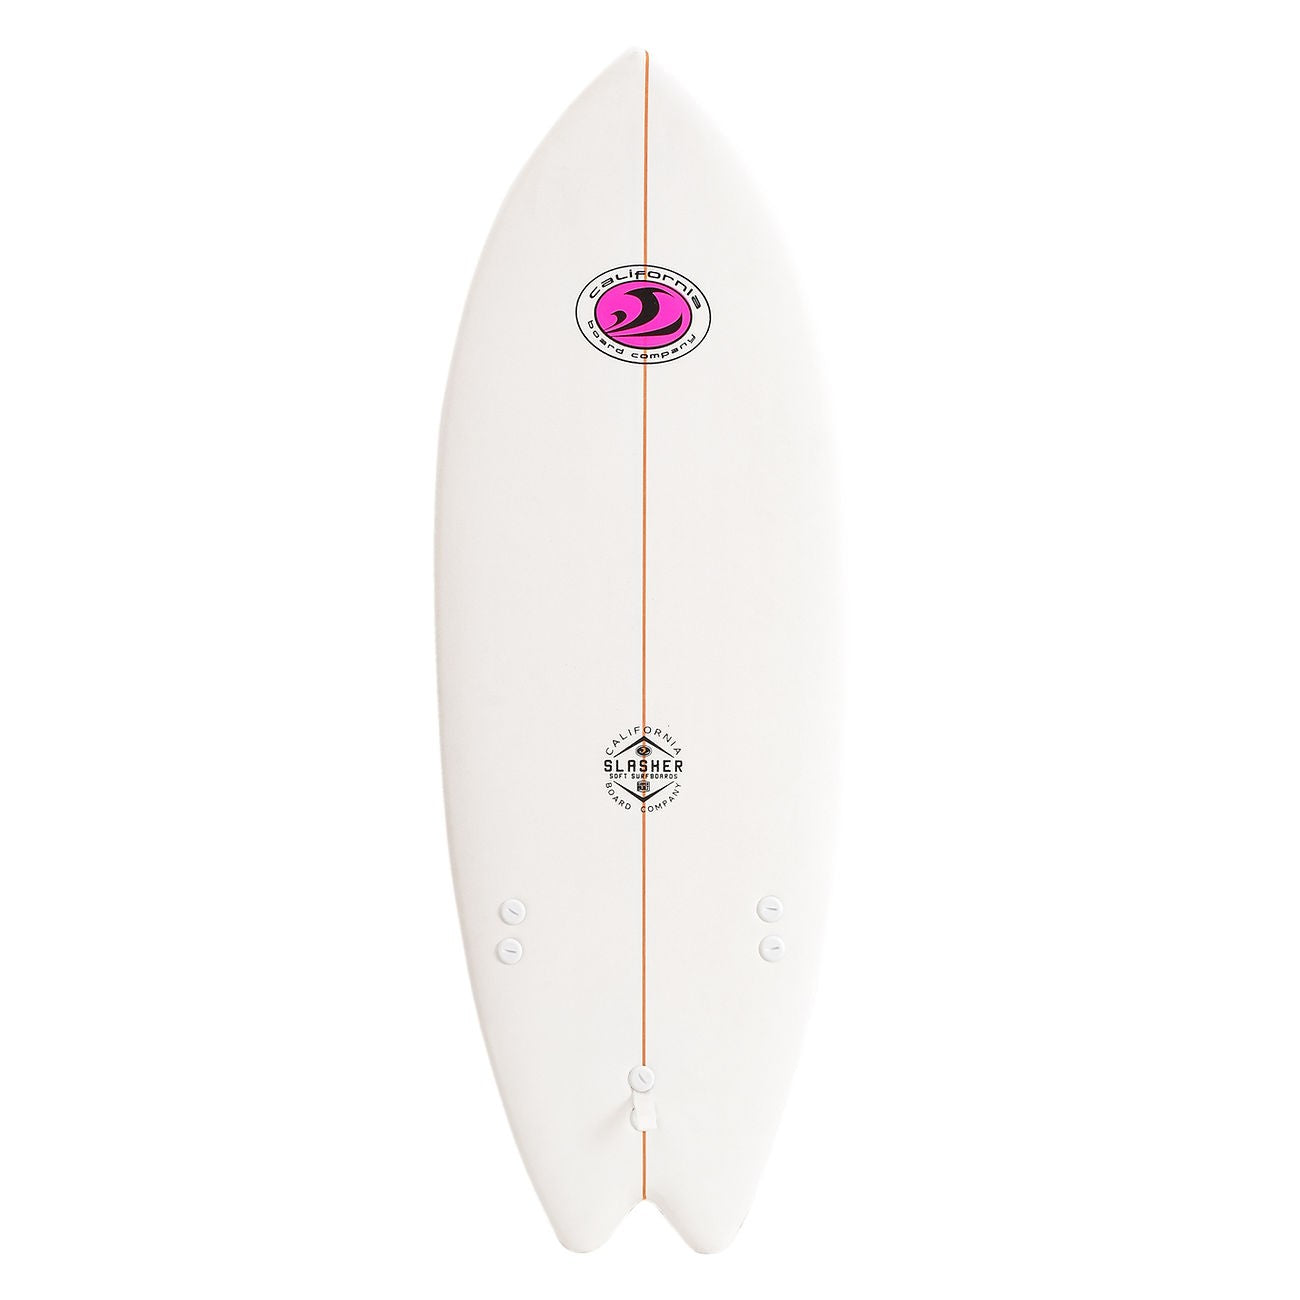 CBC - Tabla de surf de espuma -Softboard Slasher 5'2 Fish - Blanco